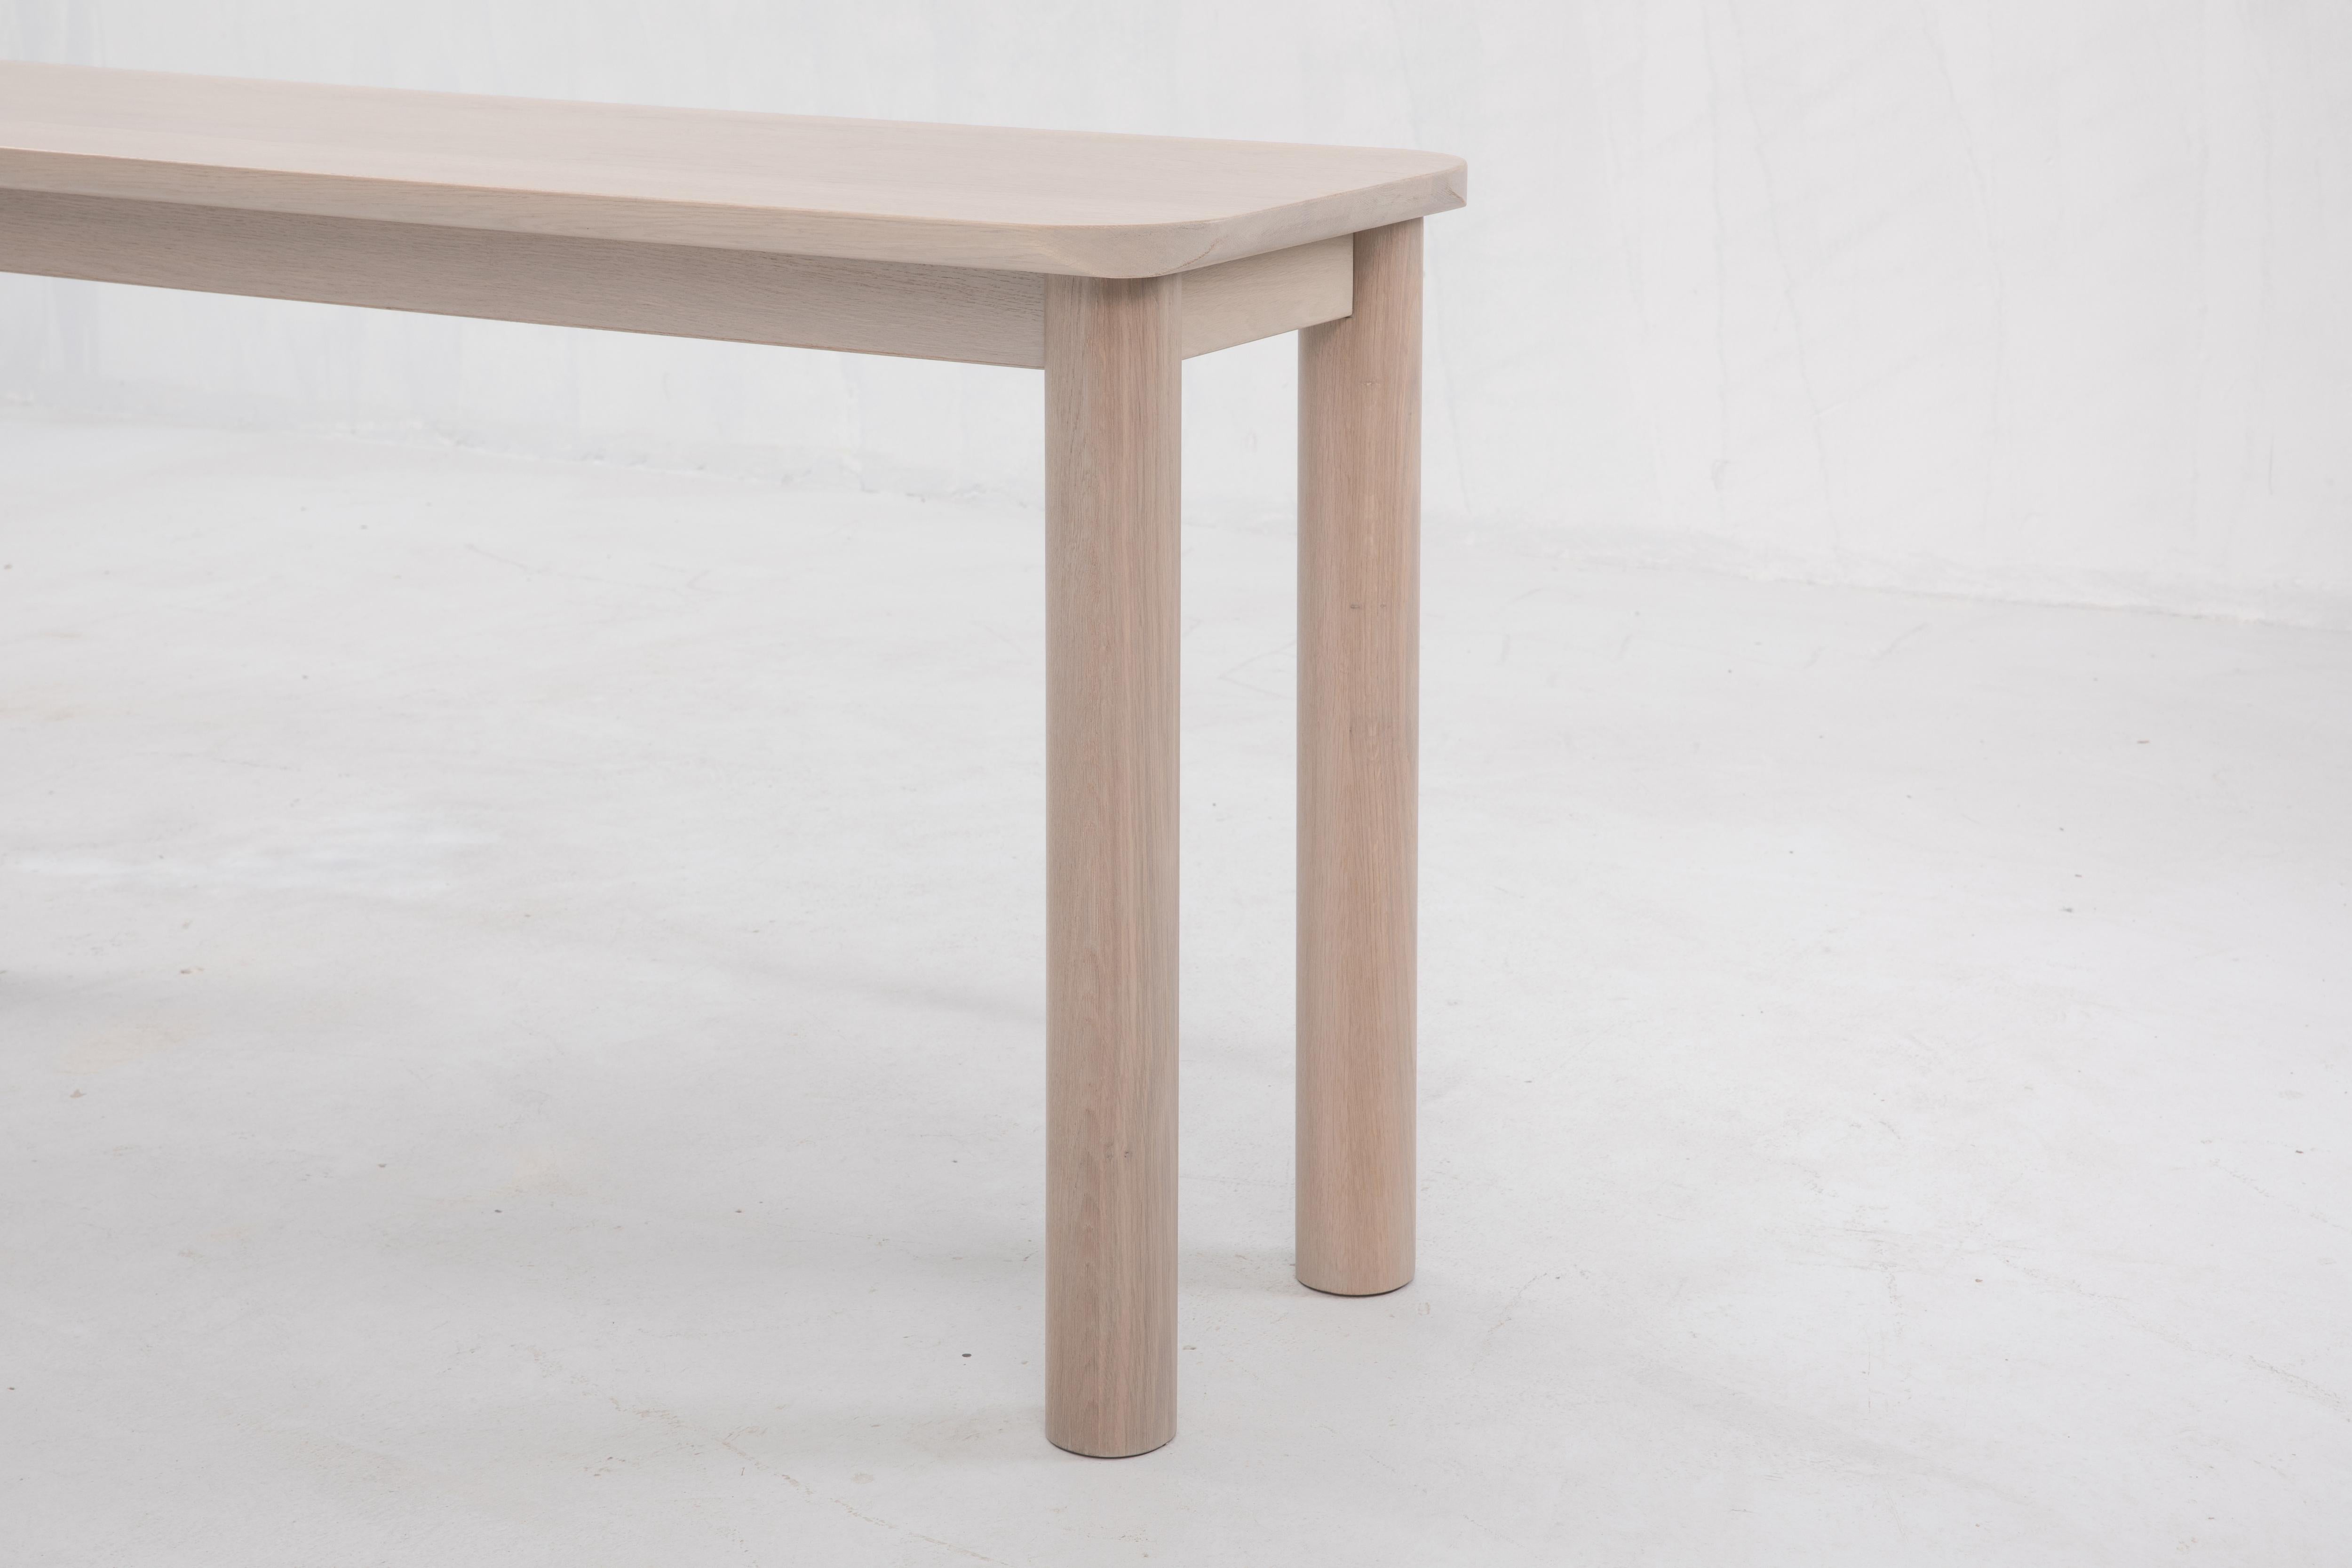 Minimaliste Console Arc, table console minimaliste nue en bois en vente